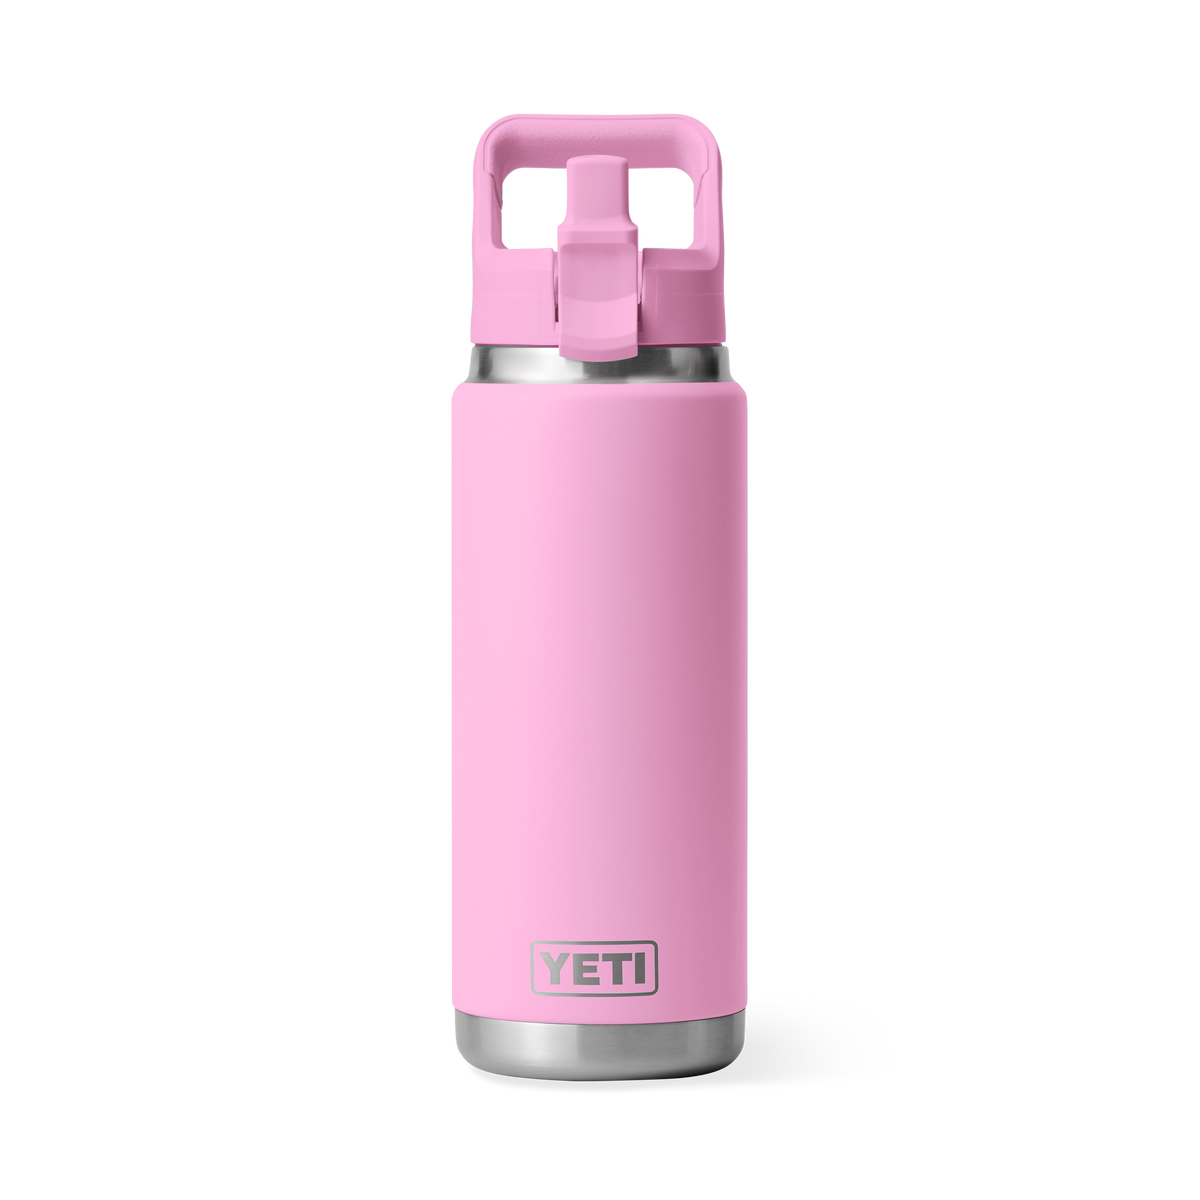 Yeti Rambler 26oz/769ml Bottle with Colour Match Straw Cap - Power Pink